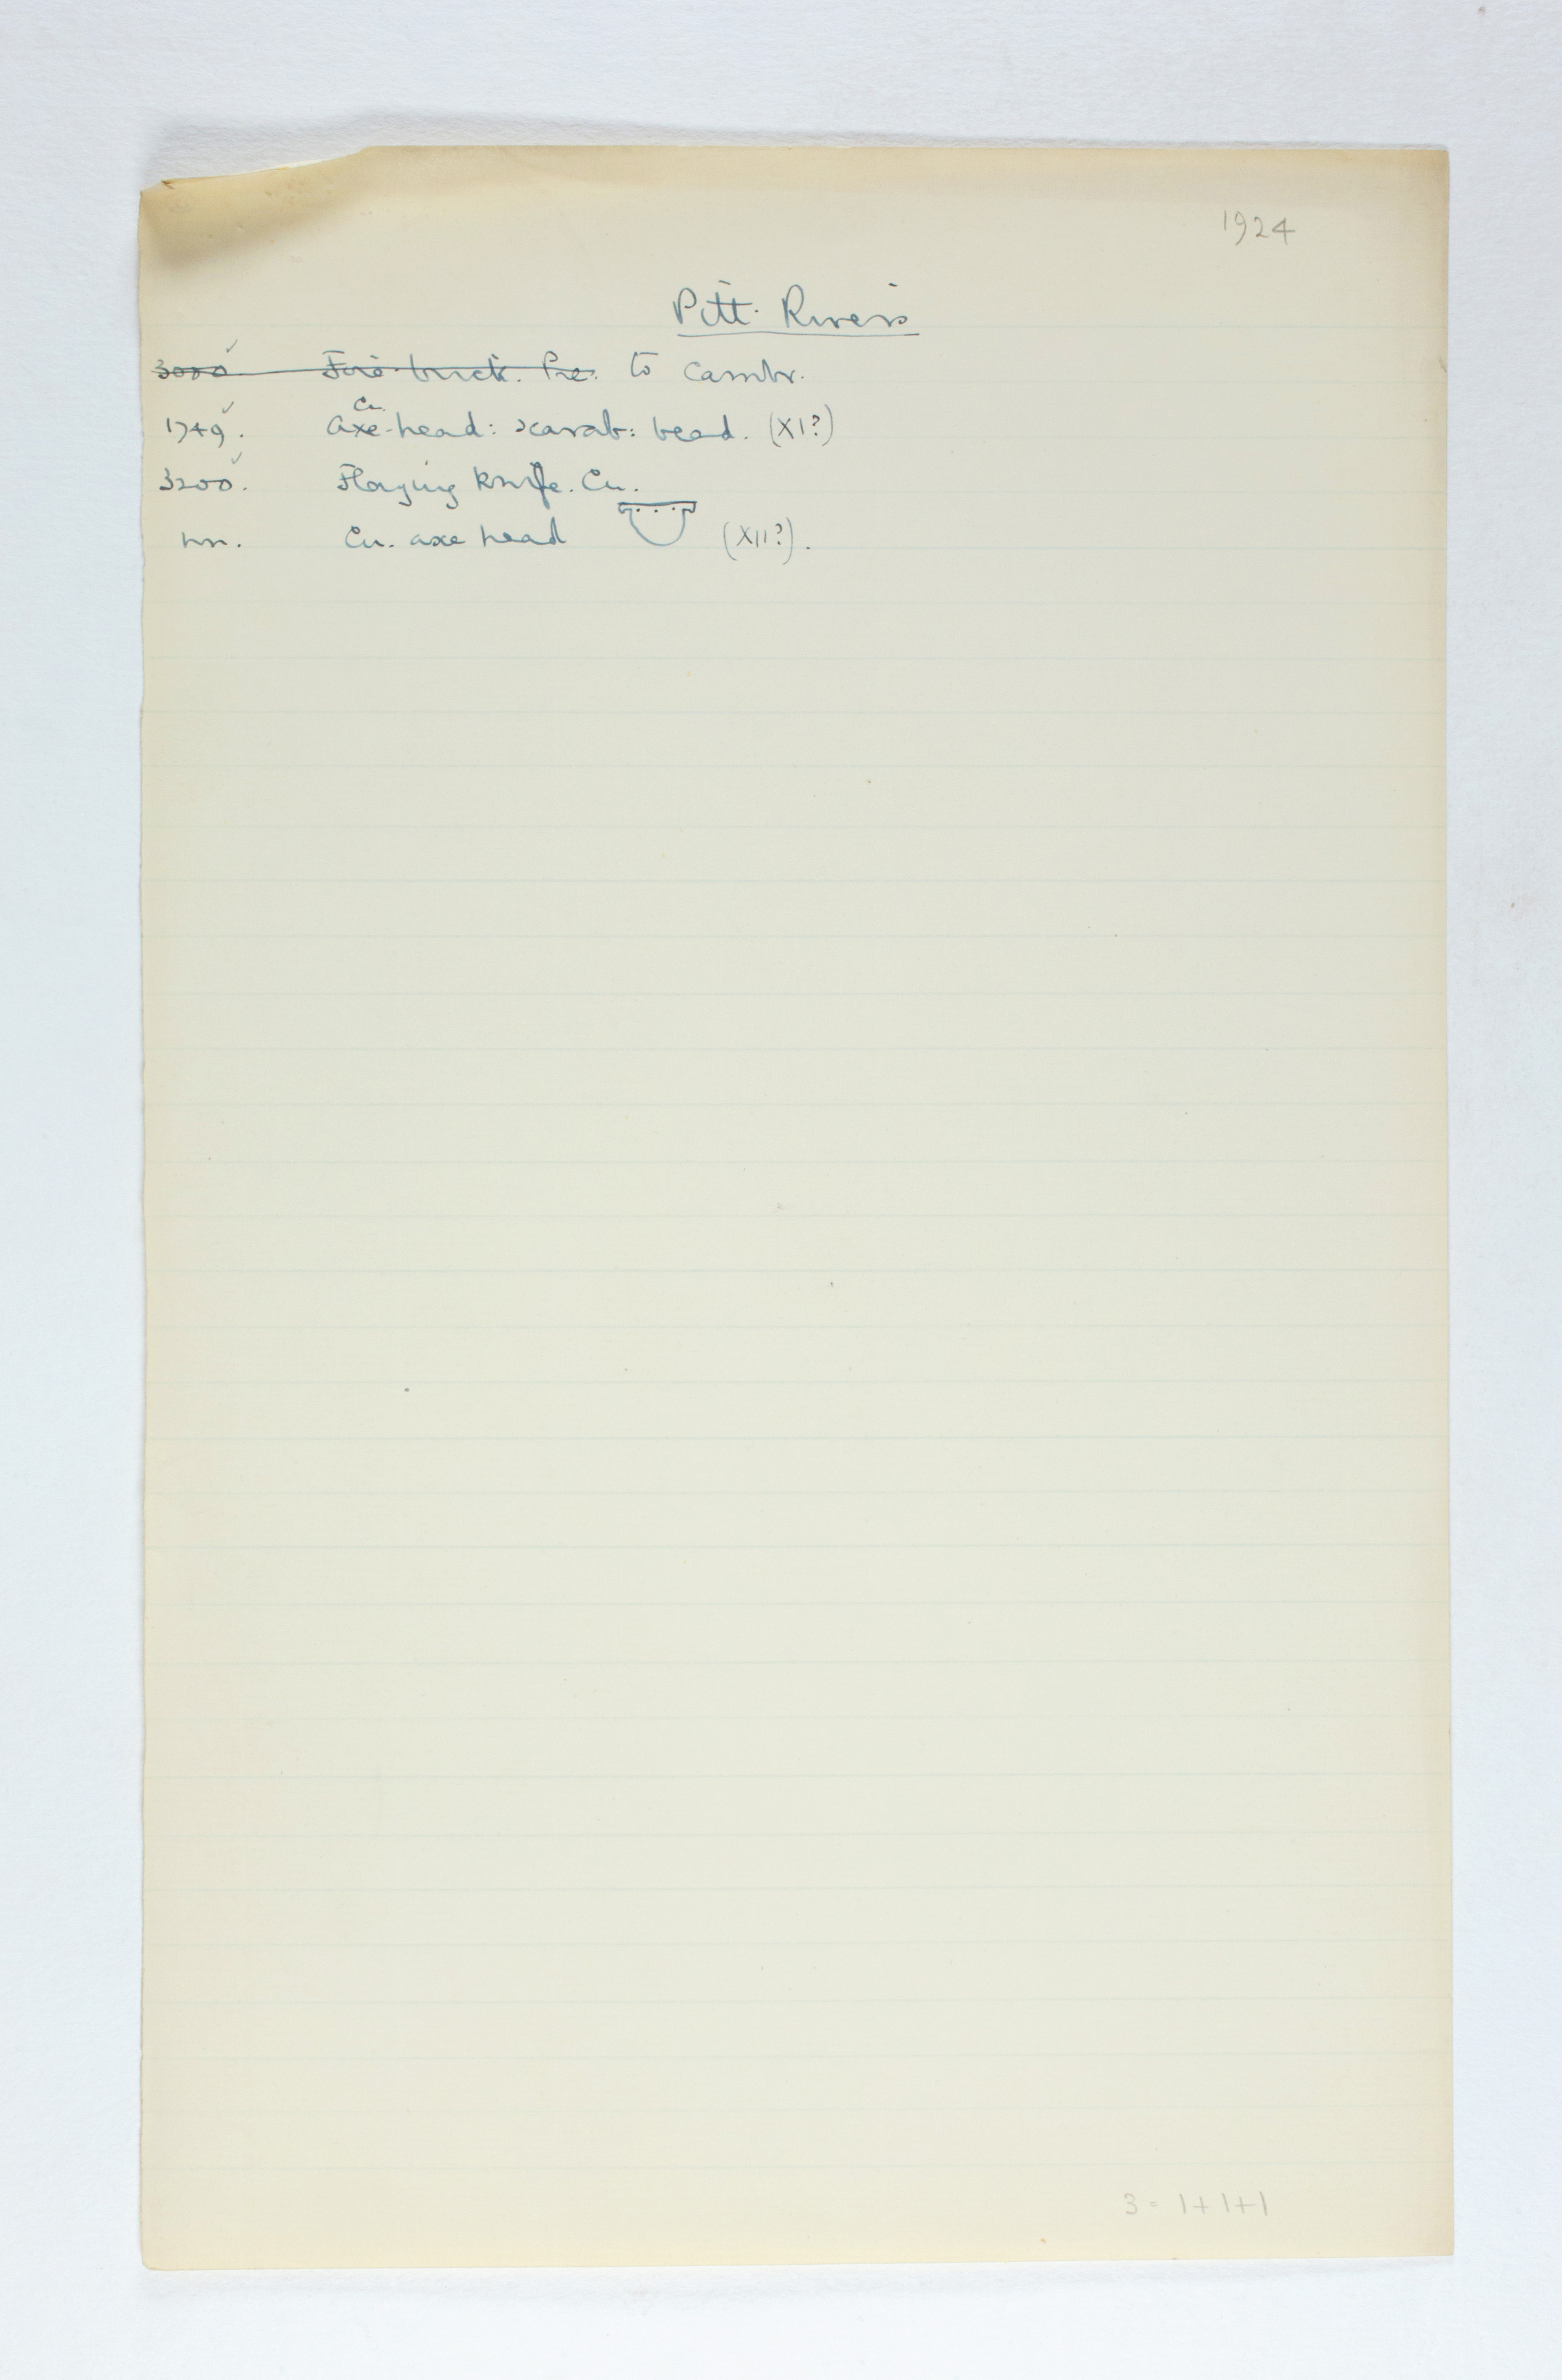 1923-24 Qau el-Kebir, Hemamieh Individual institution list PMA/WFP1/D/27/22